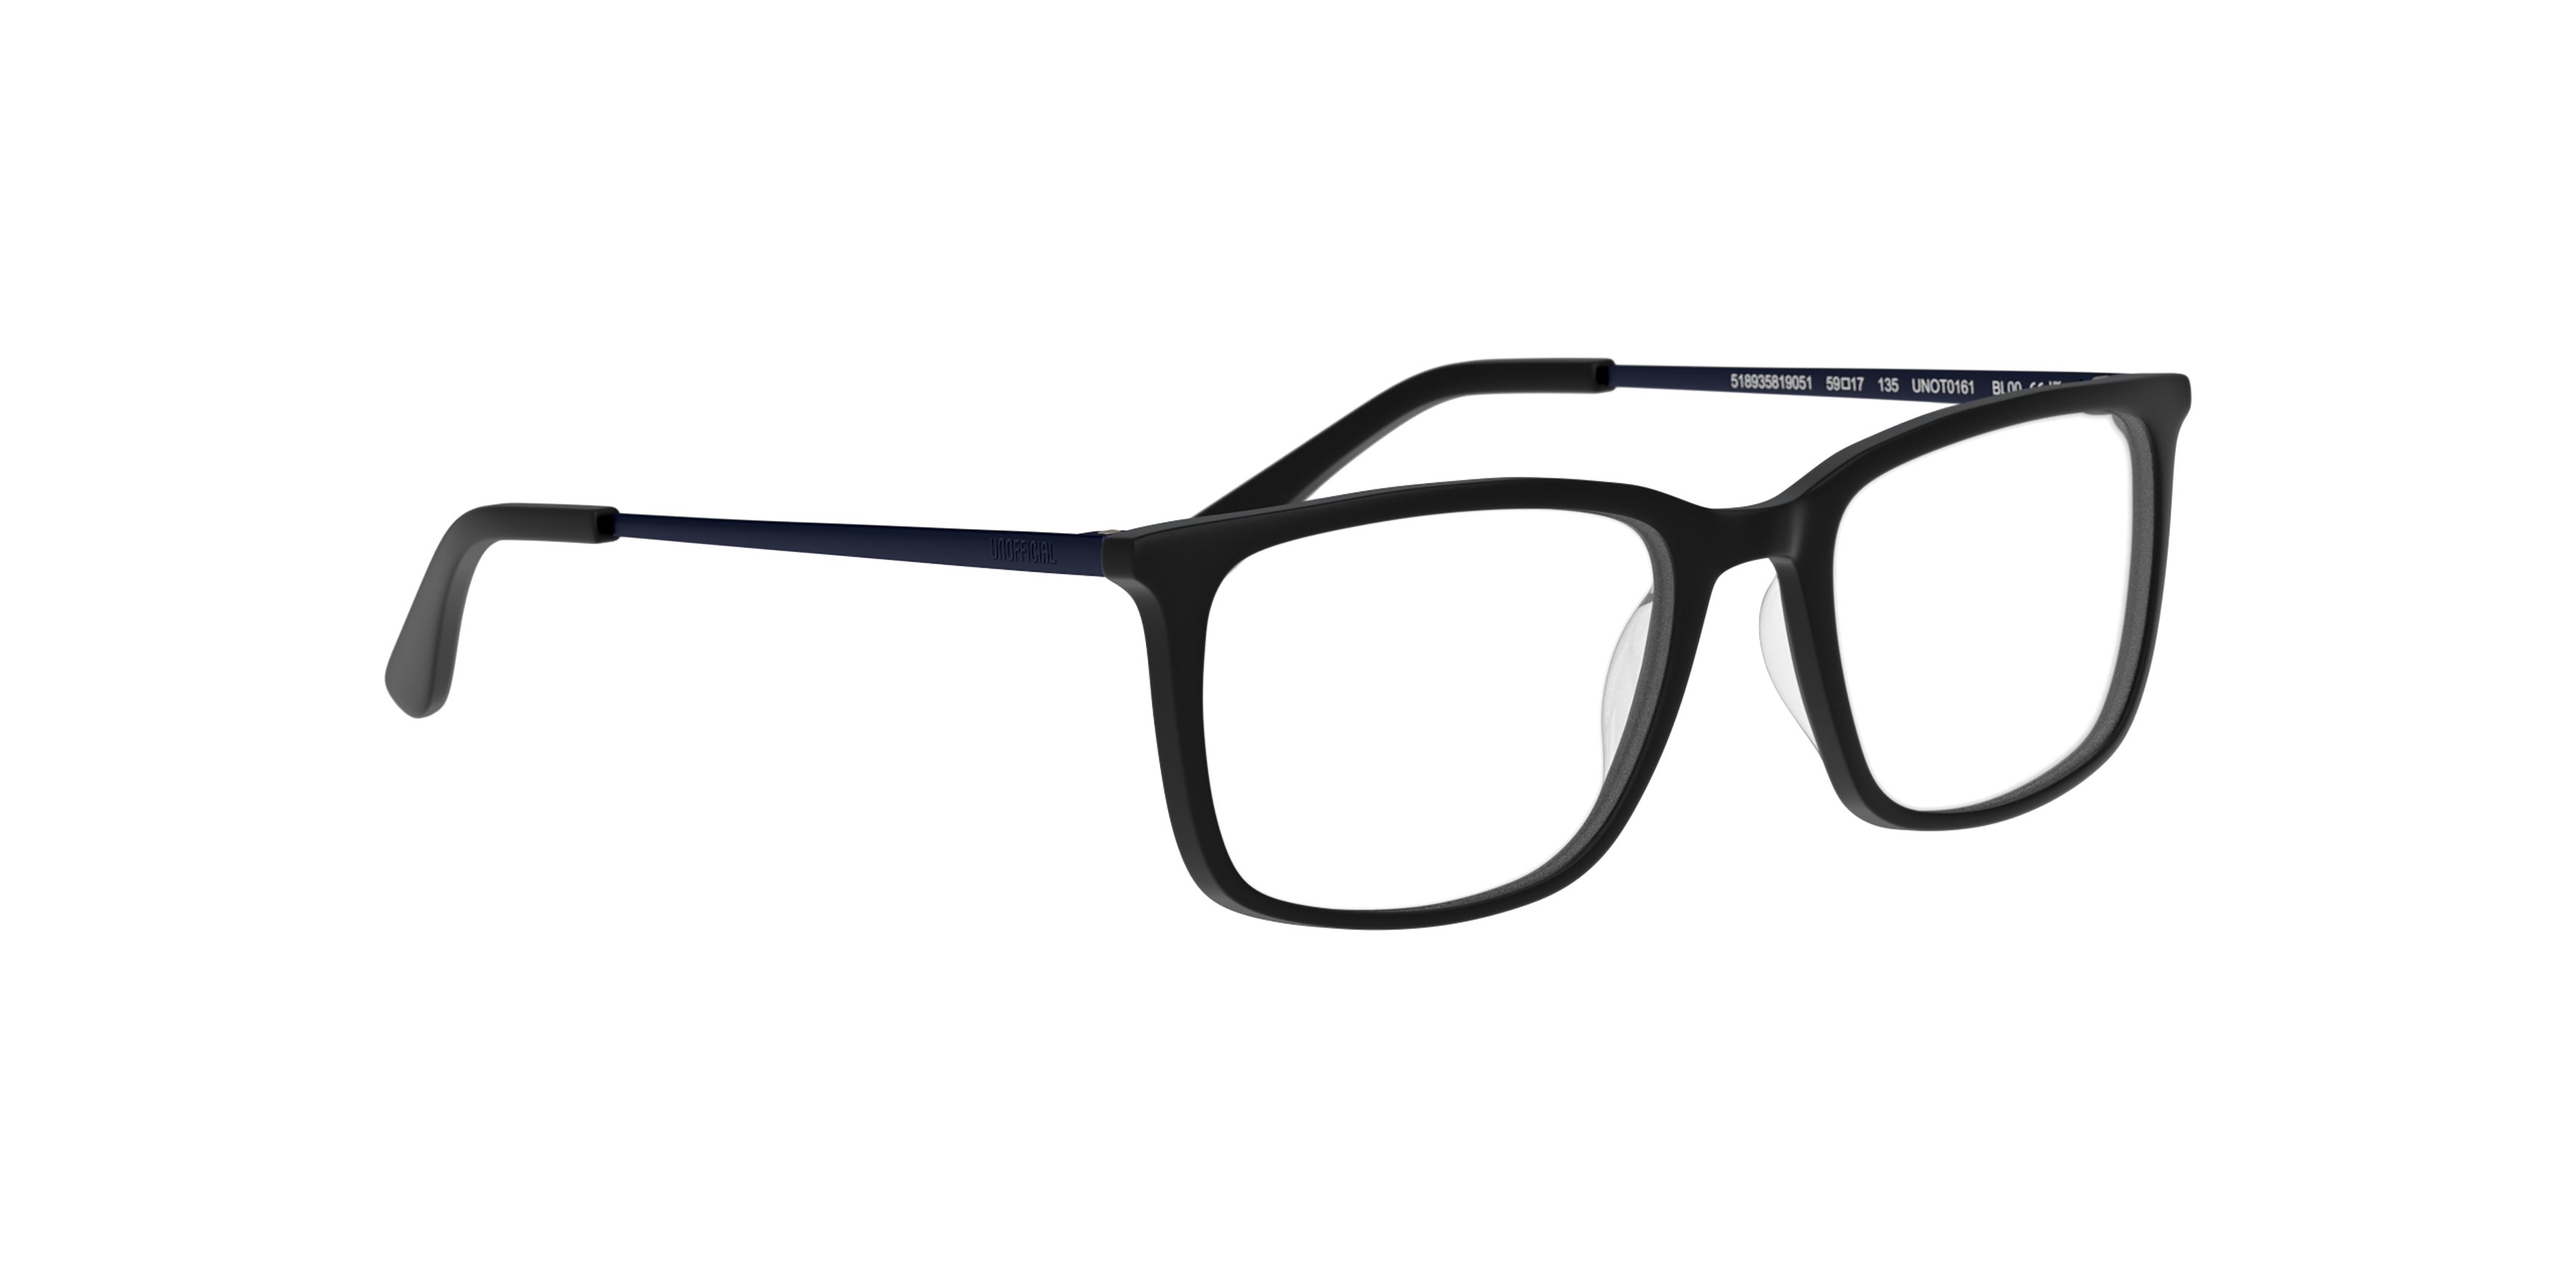 Angle_Right01 Unofficial UN OT0161 (BL00) Children's Glasses Transparent / Black